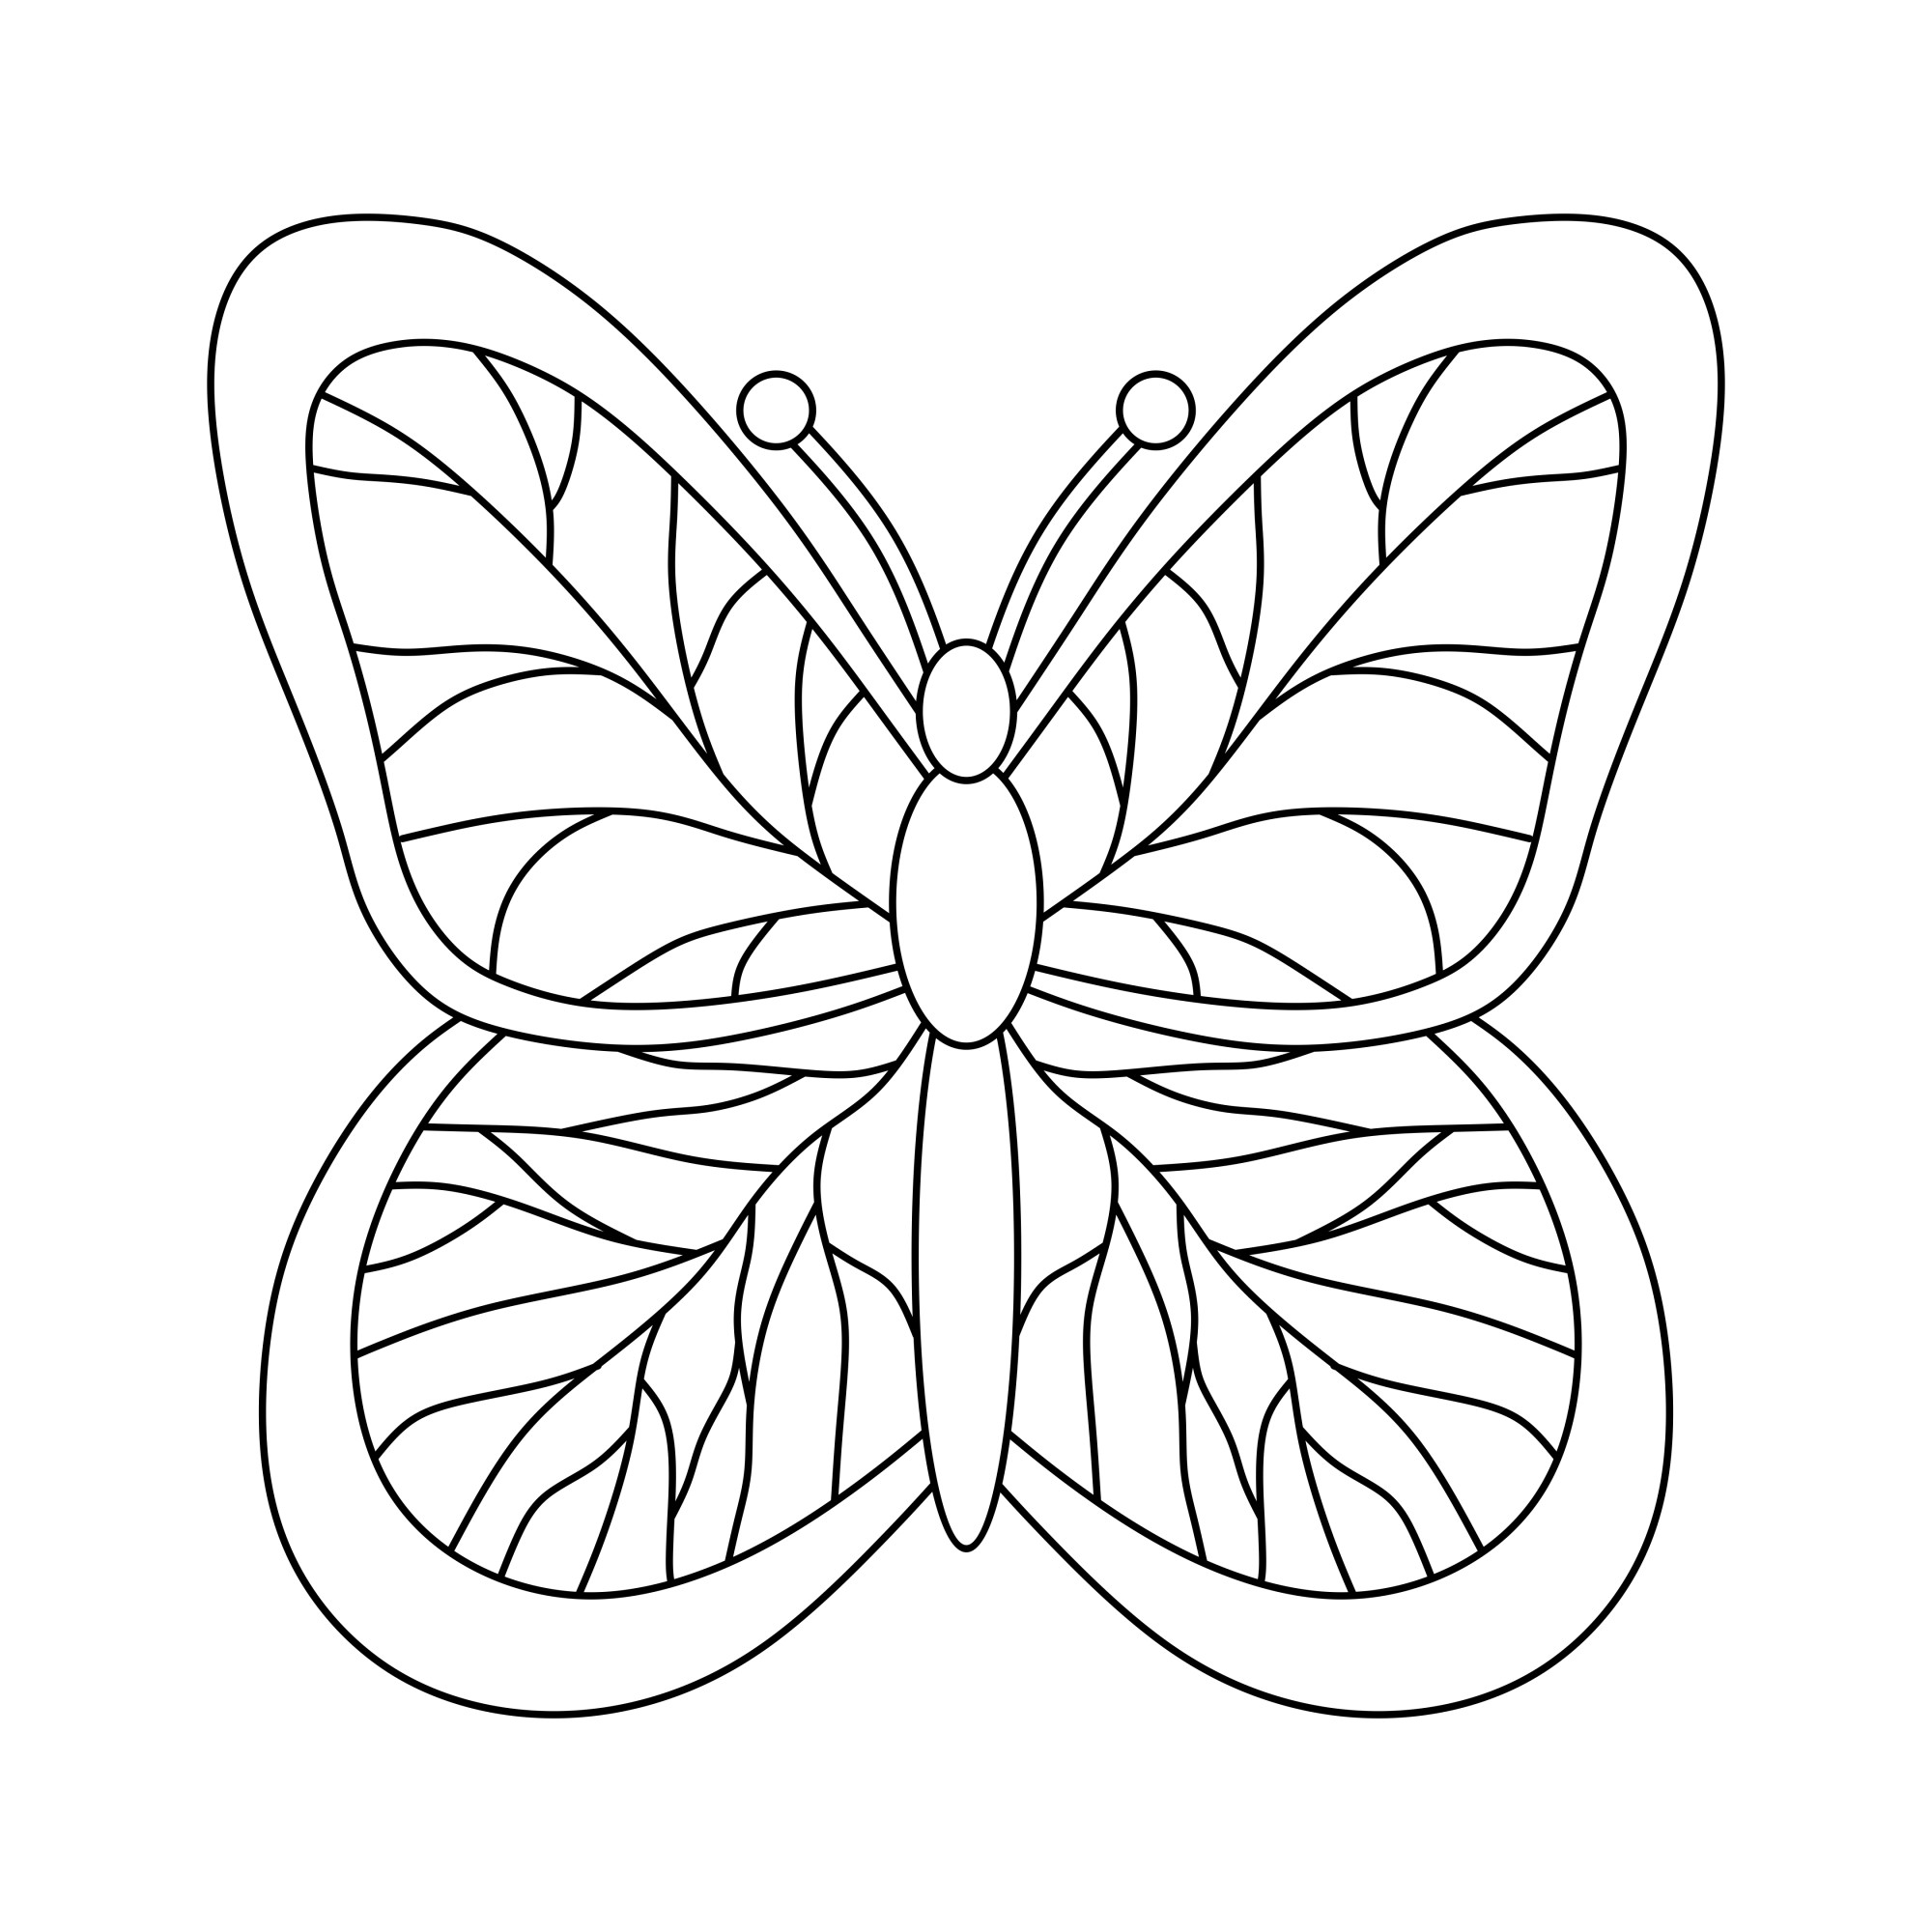 Раскраска для детей: трафарет бабочка